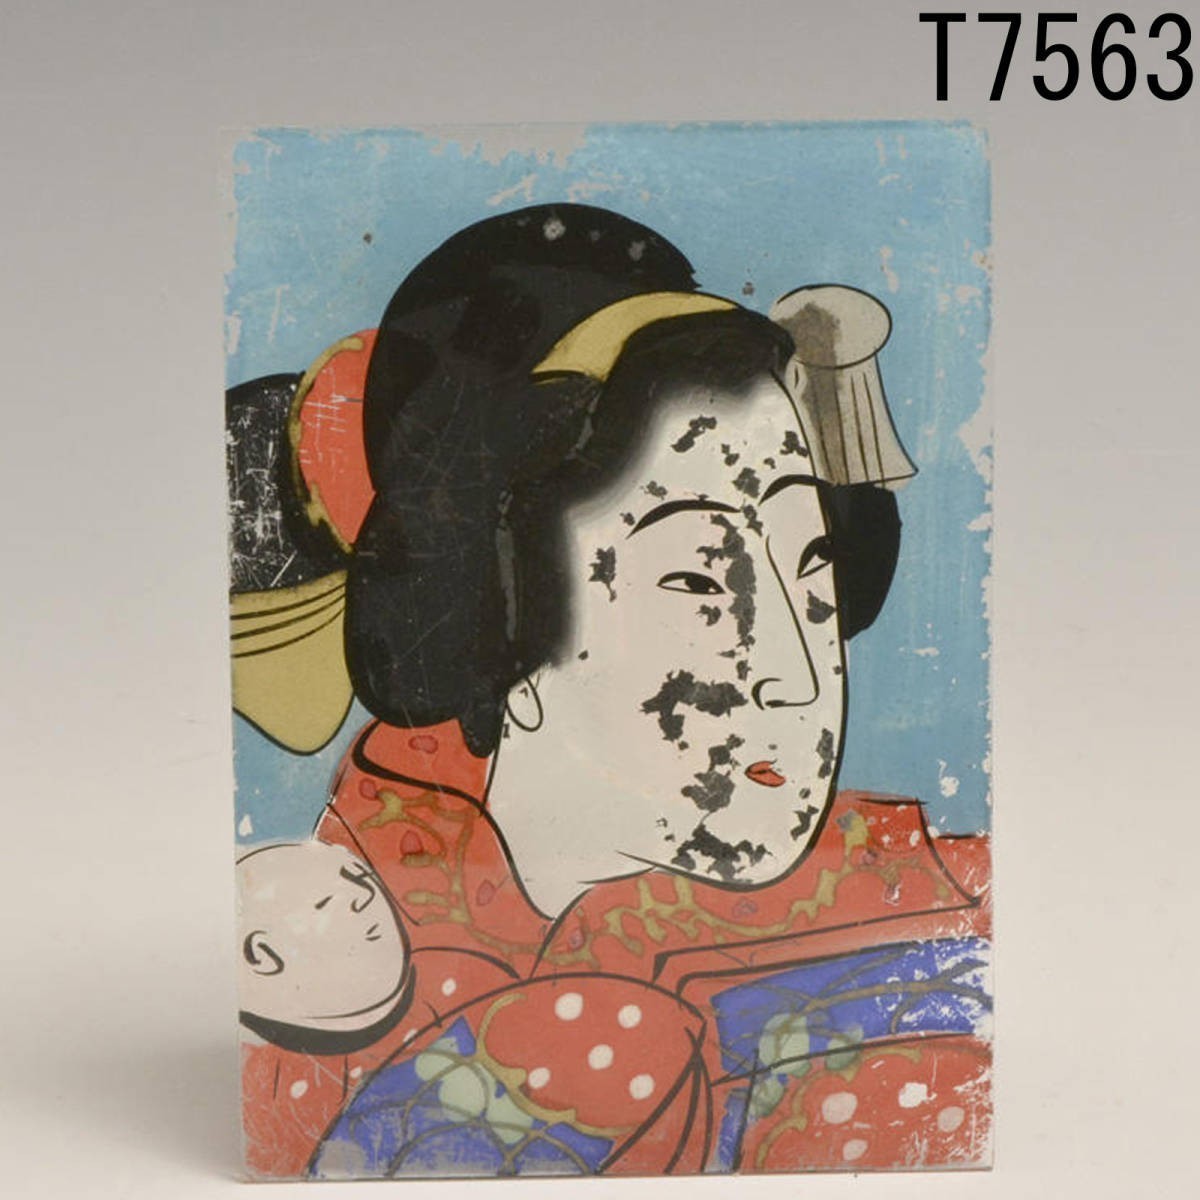 T07563 Glasmalerei Ukiyo-e: Shinsaku, Malerei, Ukiyo-e, drucken, Schöne Frau malt